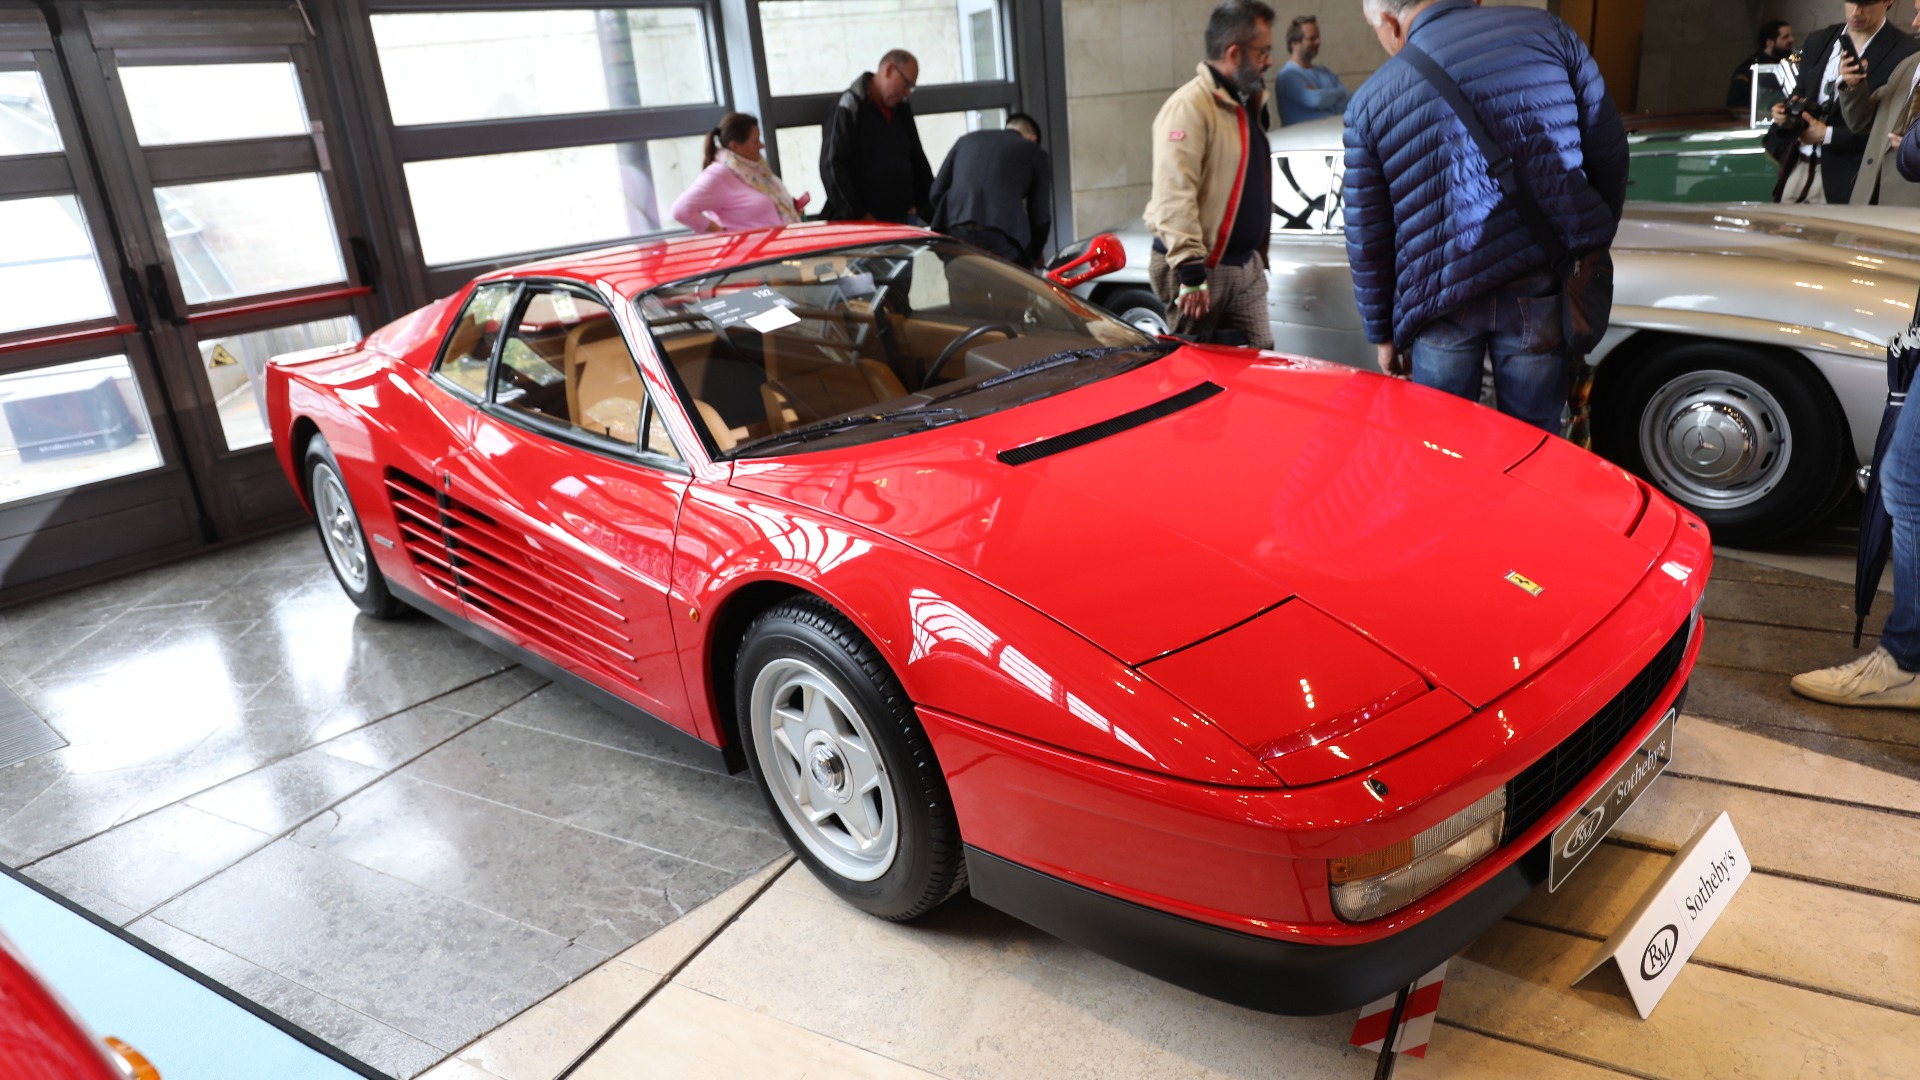 1986 Ferrari Testarossa - 2 279 663 kr